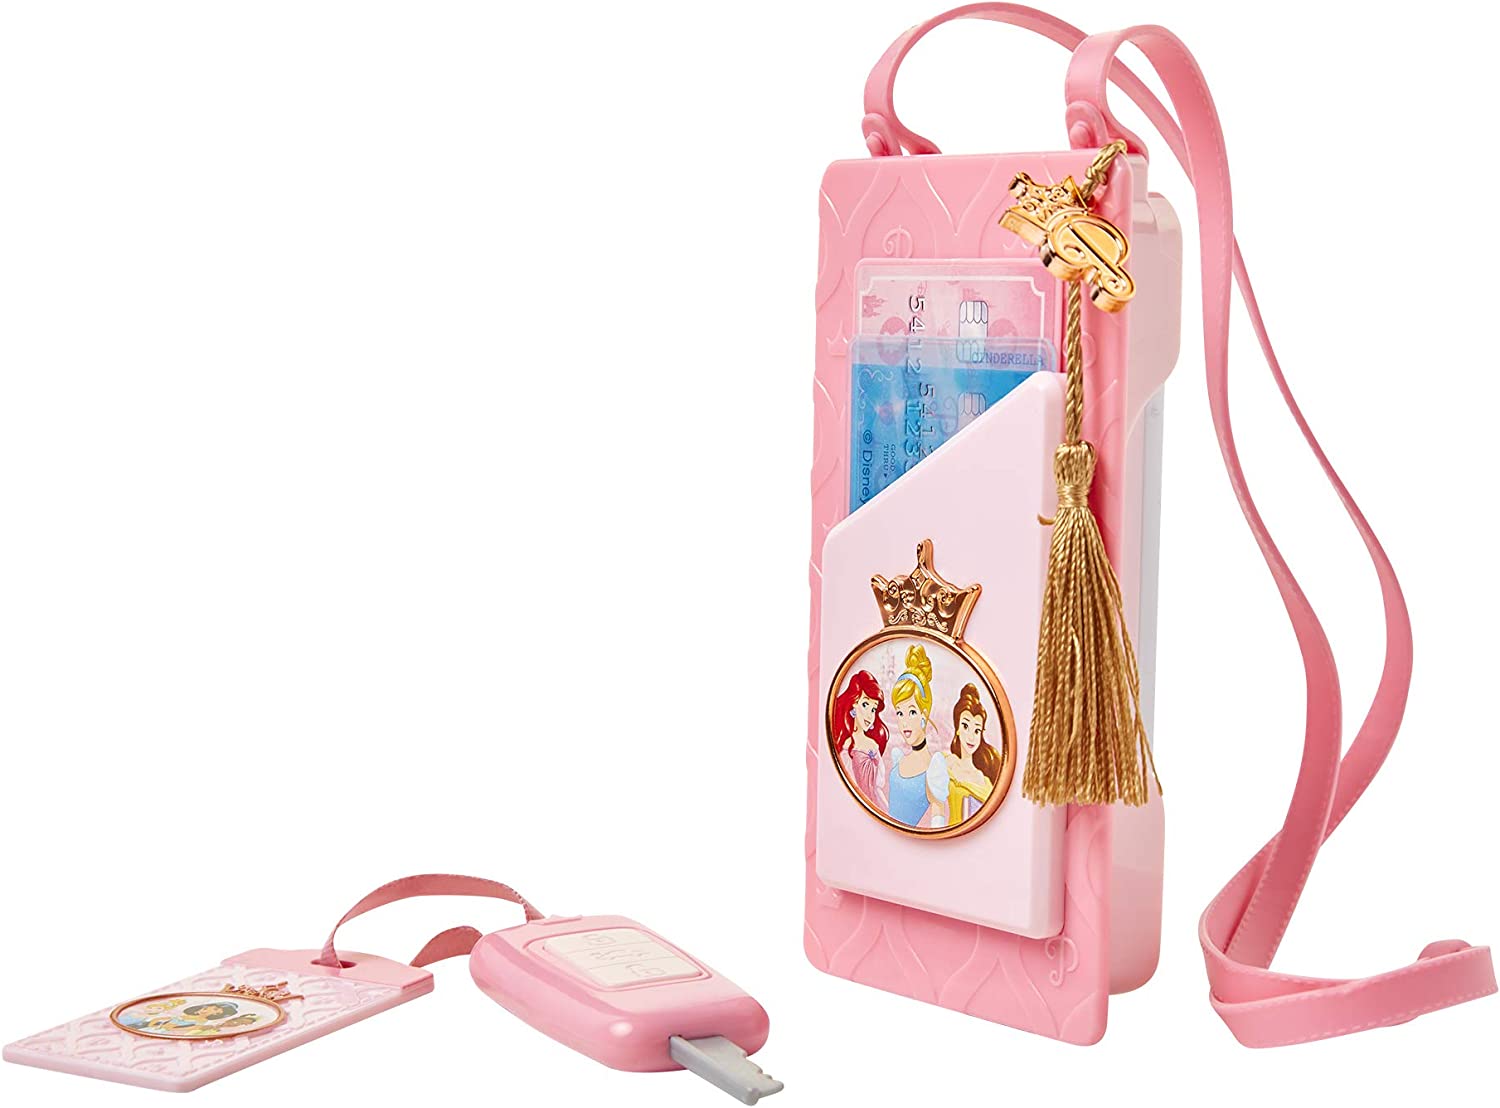 Disney Princess On the Go Phone Set